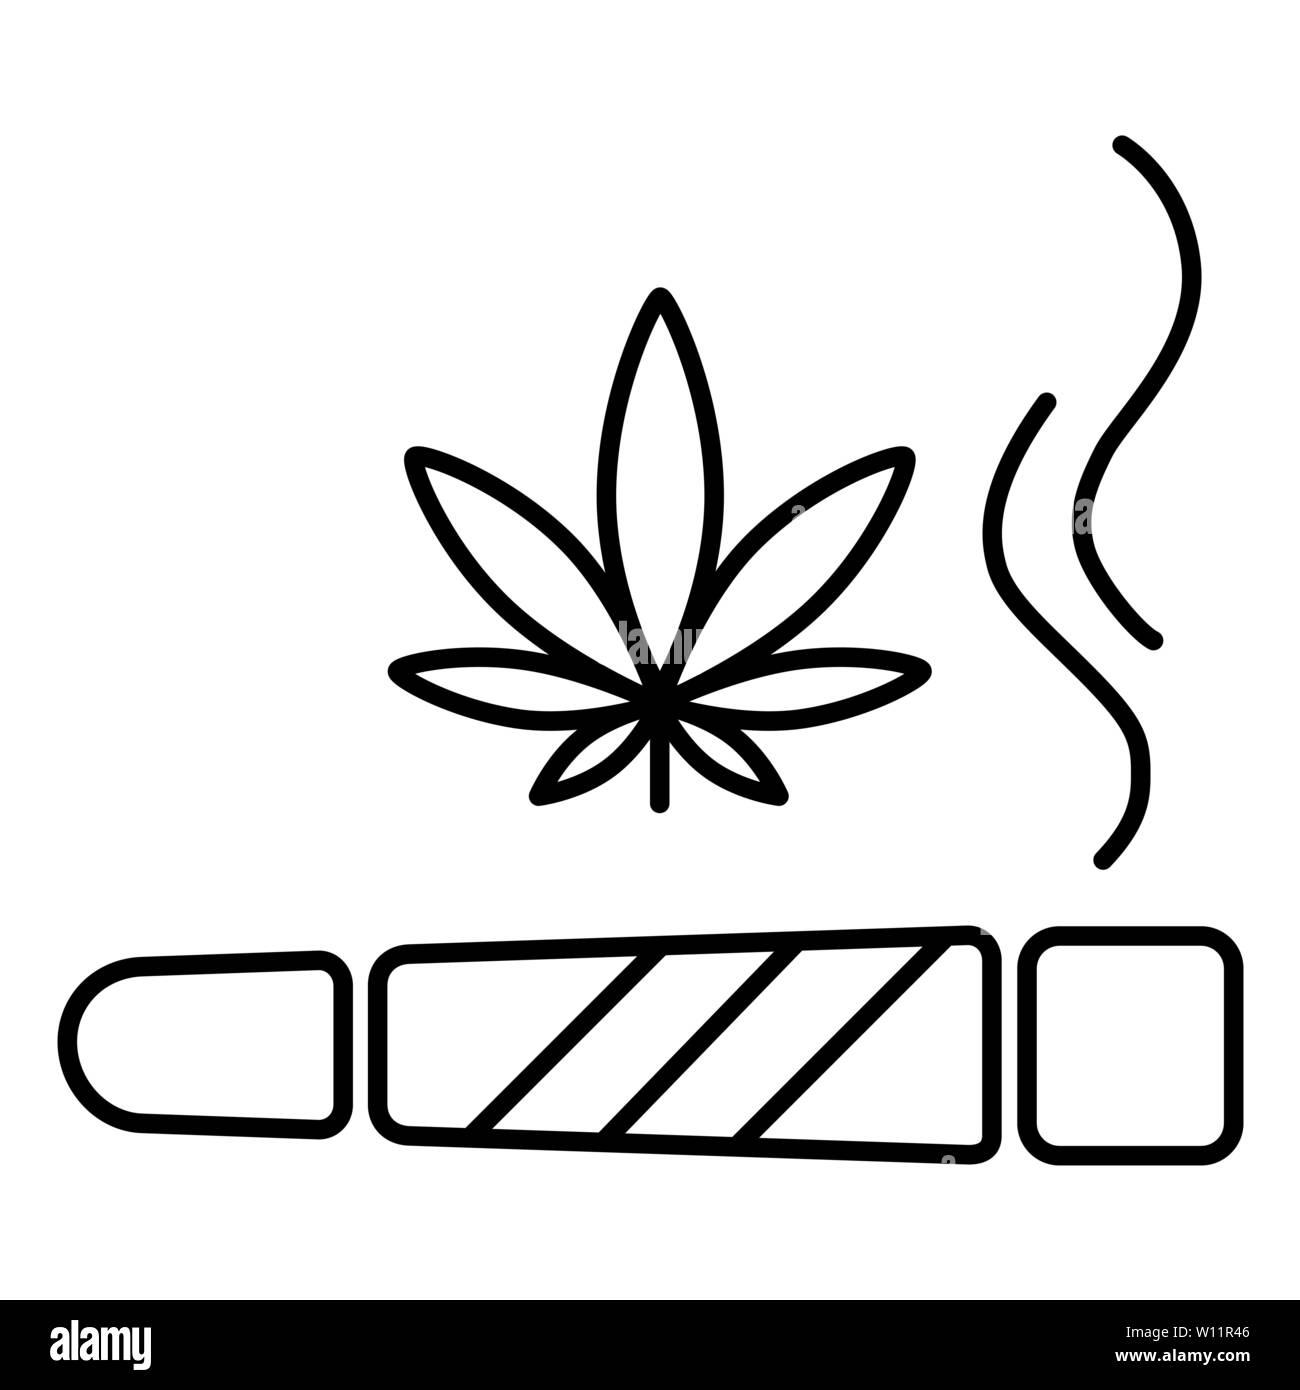 Marijuana joint icon. Isolated vector illustration on white background. Stock Vector